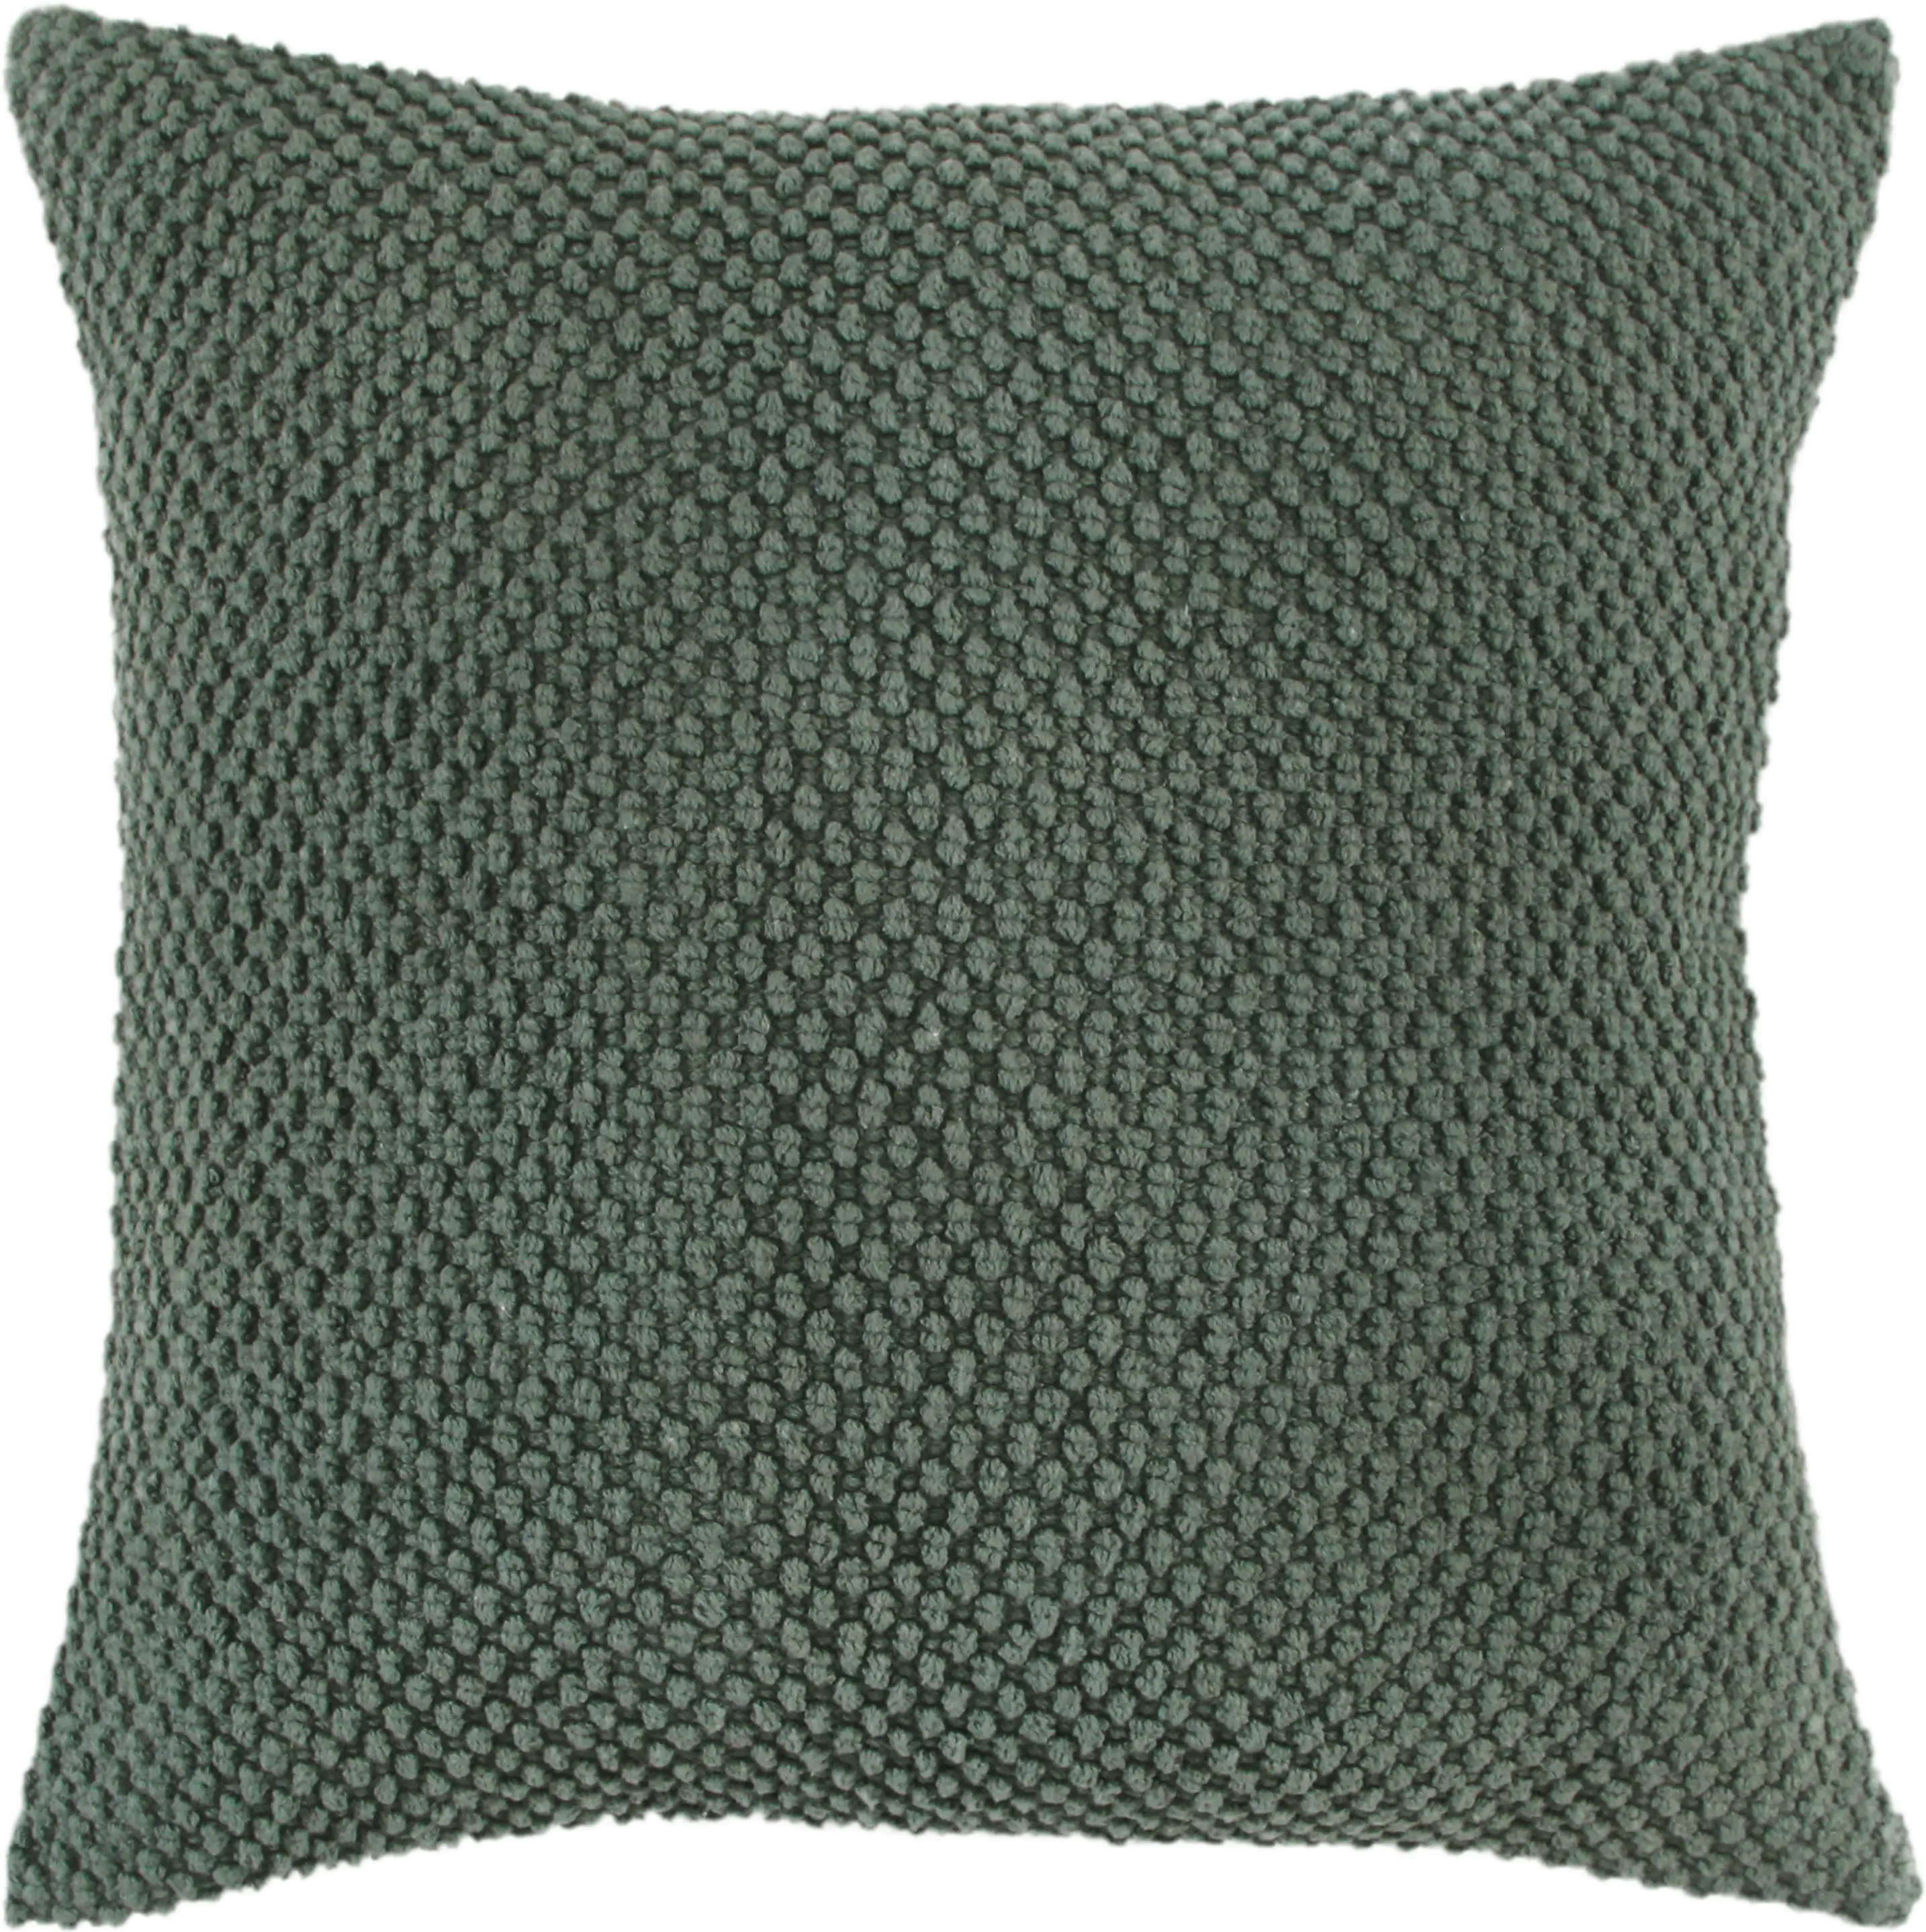 Cecelia Green Accent Pillow